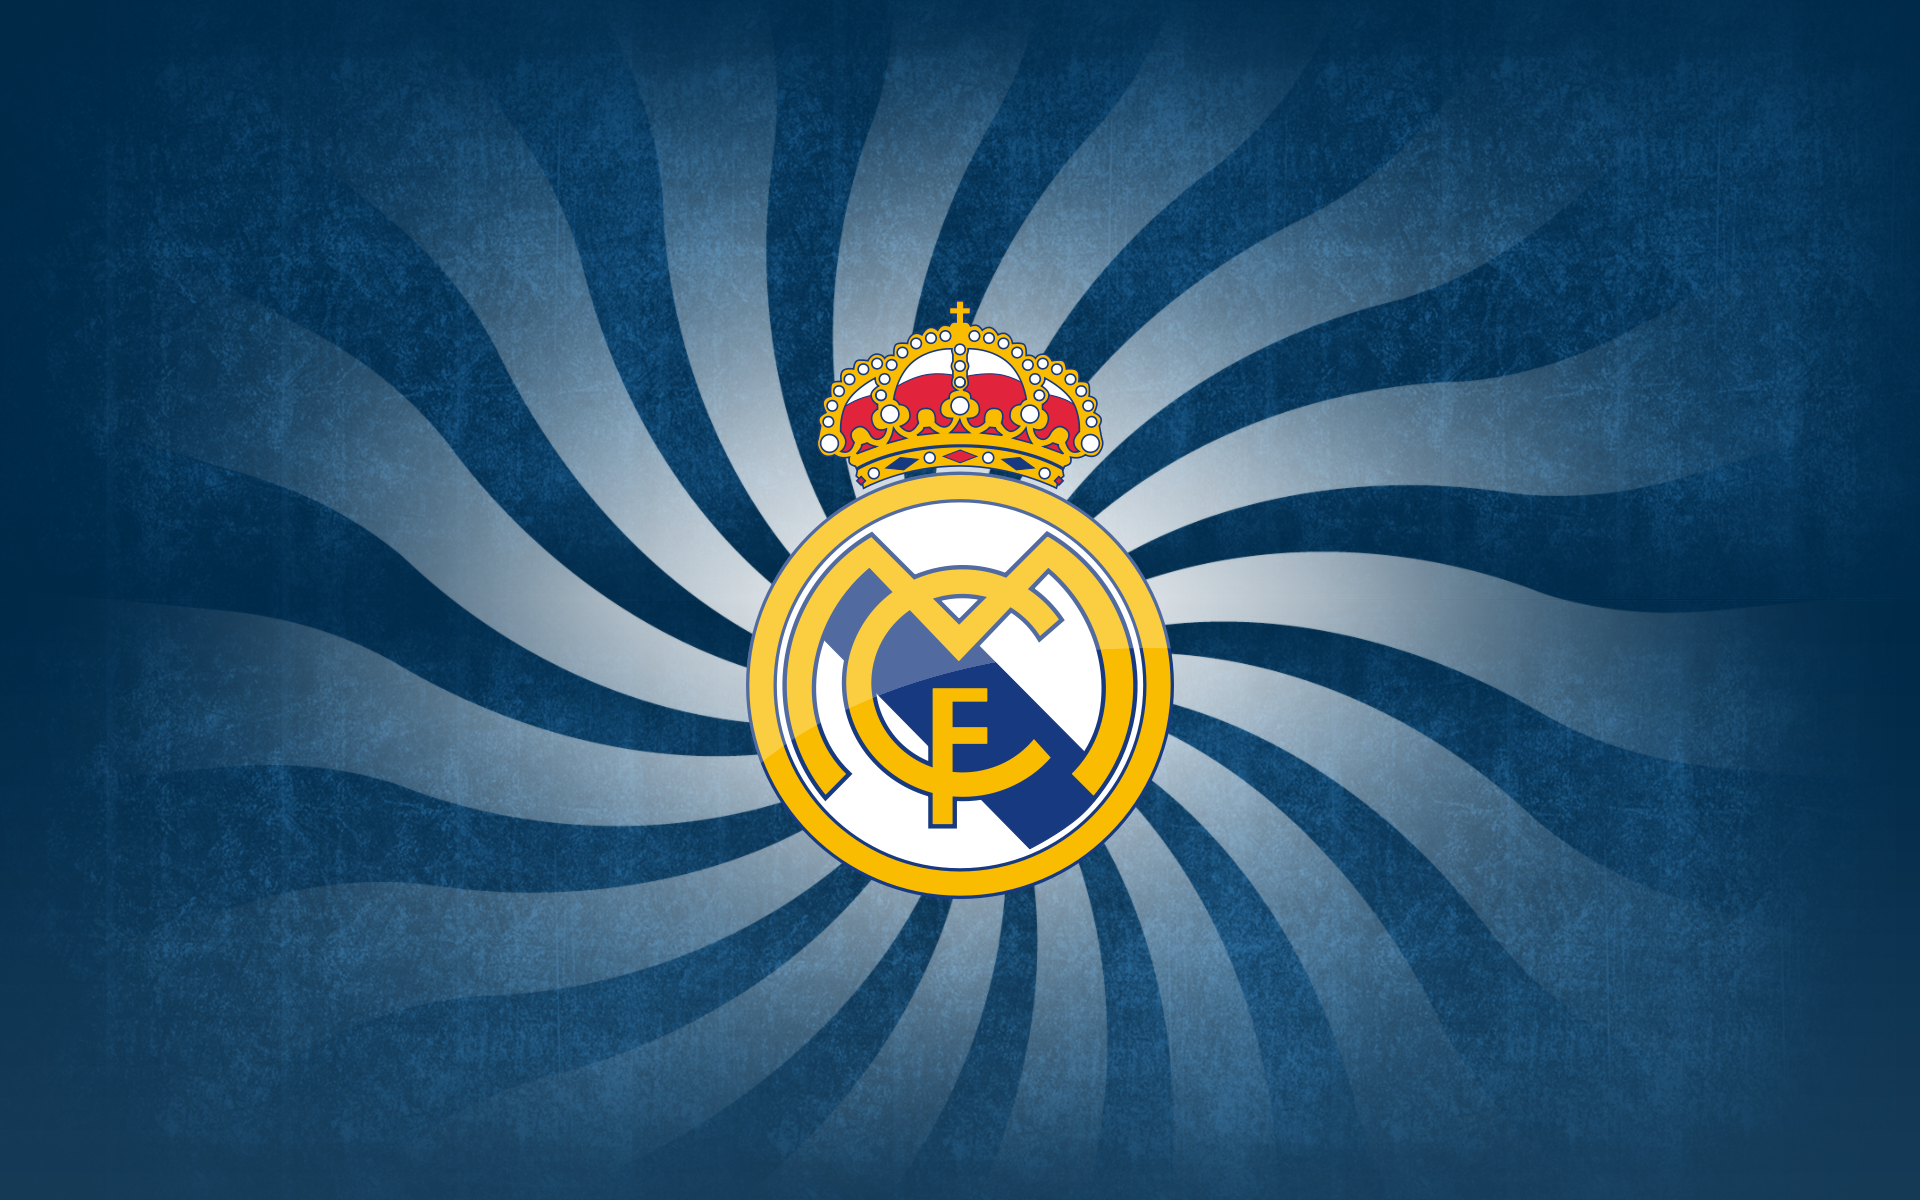 Real Madrid Logo 2016 Football Club Fotolipcom Rich Image And